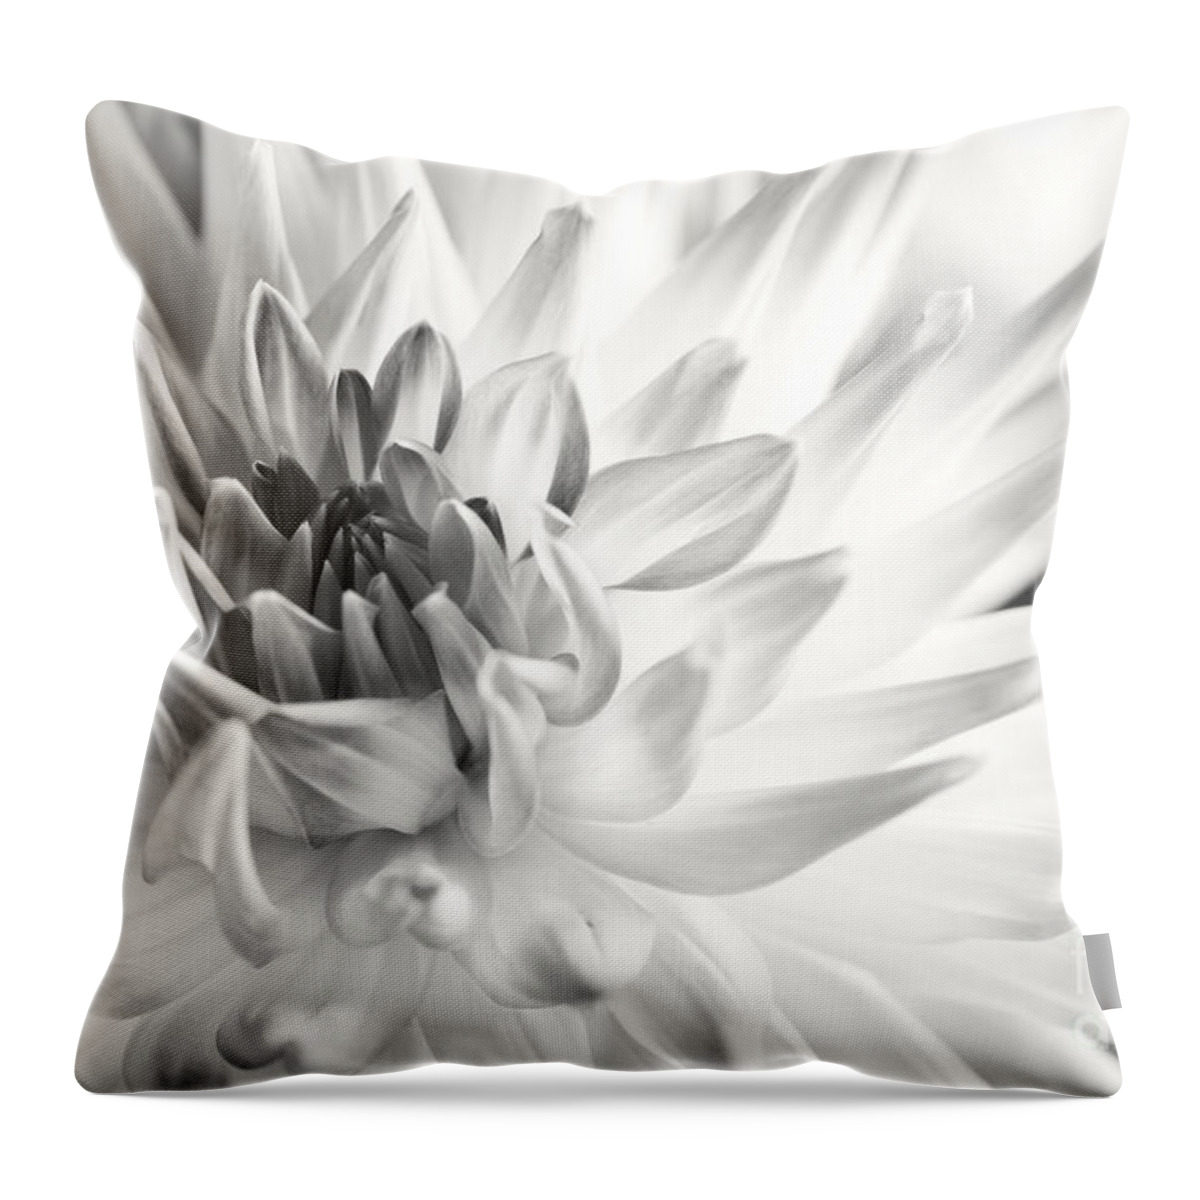 Dahlia Throw Pillow featuring the photograph Dahlia Flower 02 by Nailia Schwarz